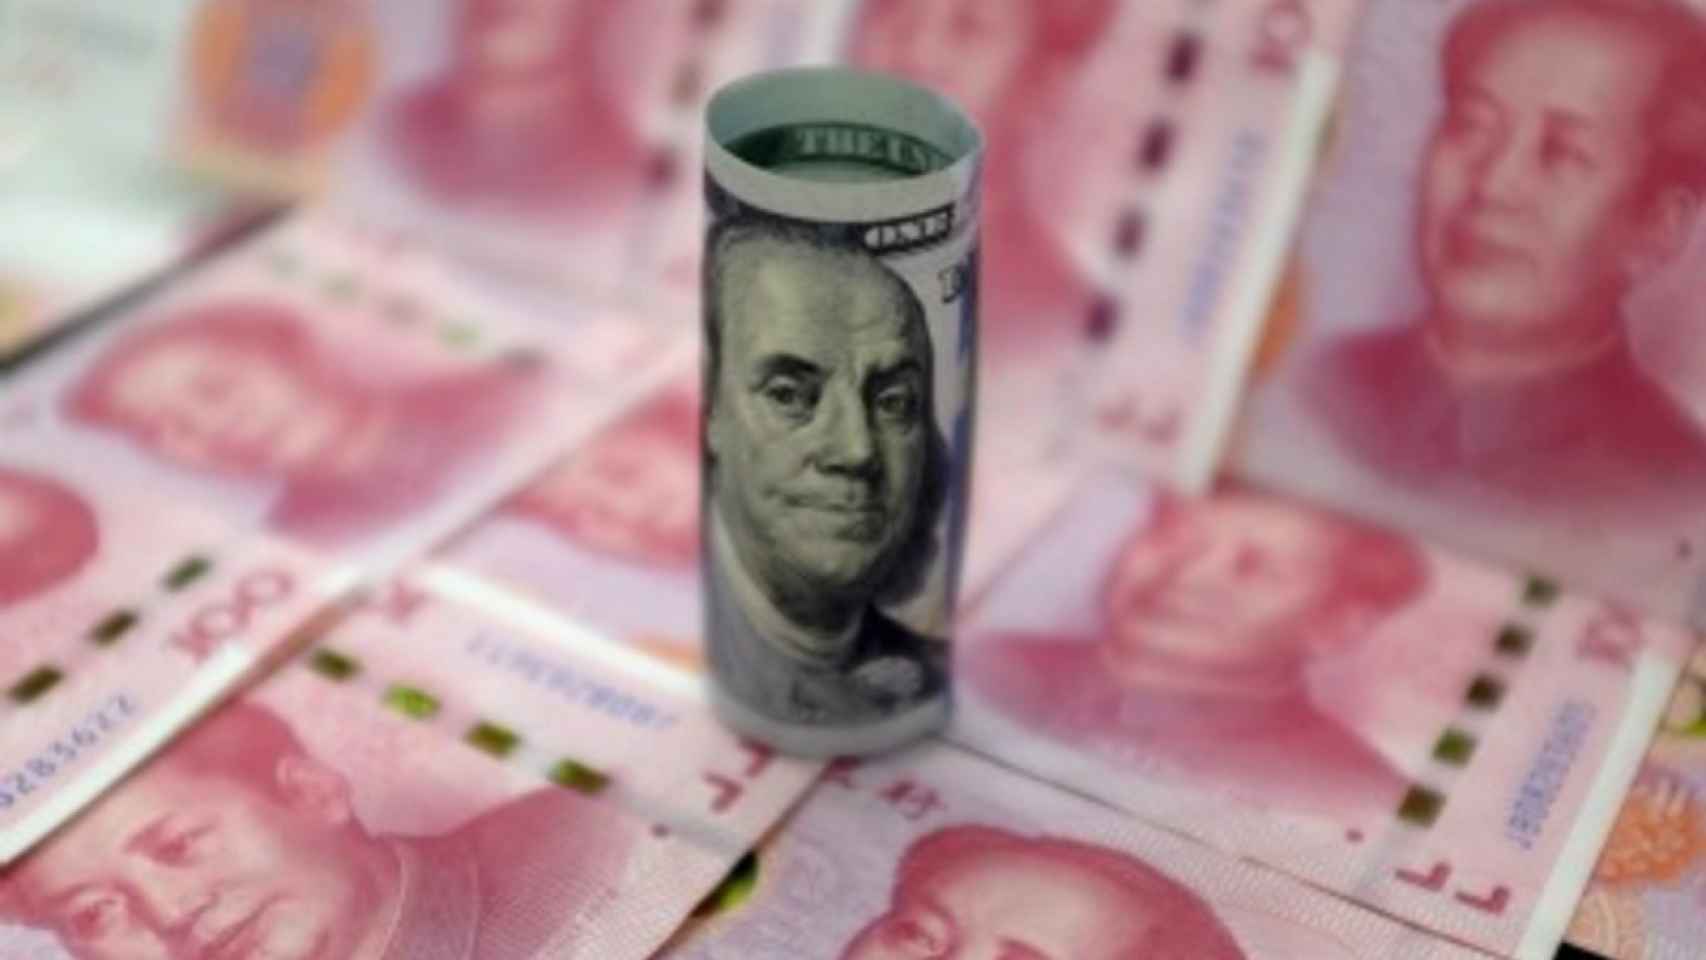 China acelera la apreciación del yuan para aplacar a Trump